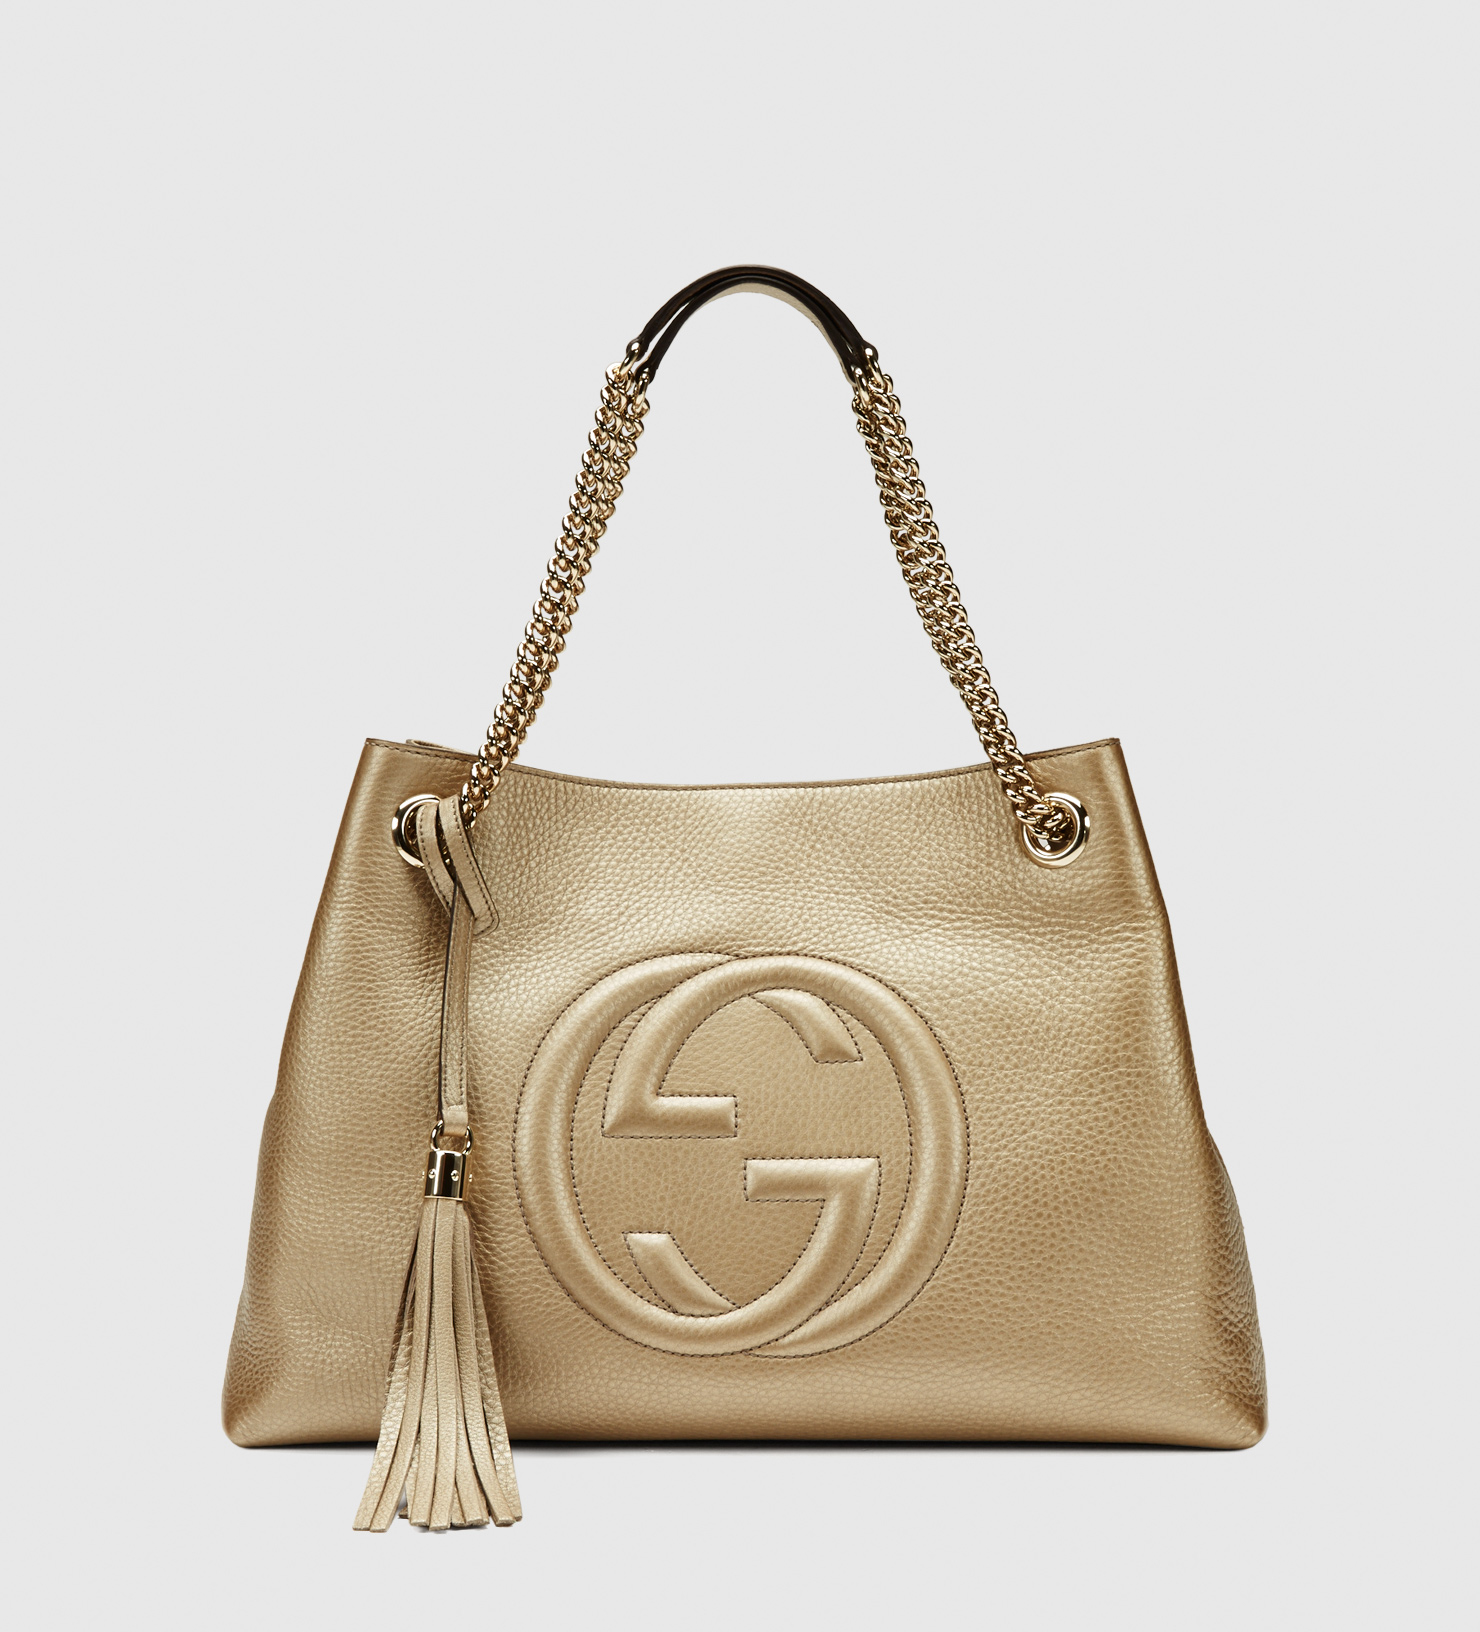 Gucci Soho Metallic Leather Shoulder Bag - Lyst